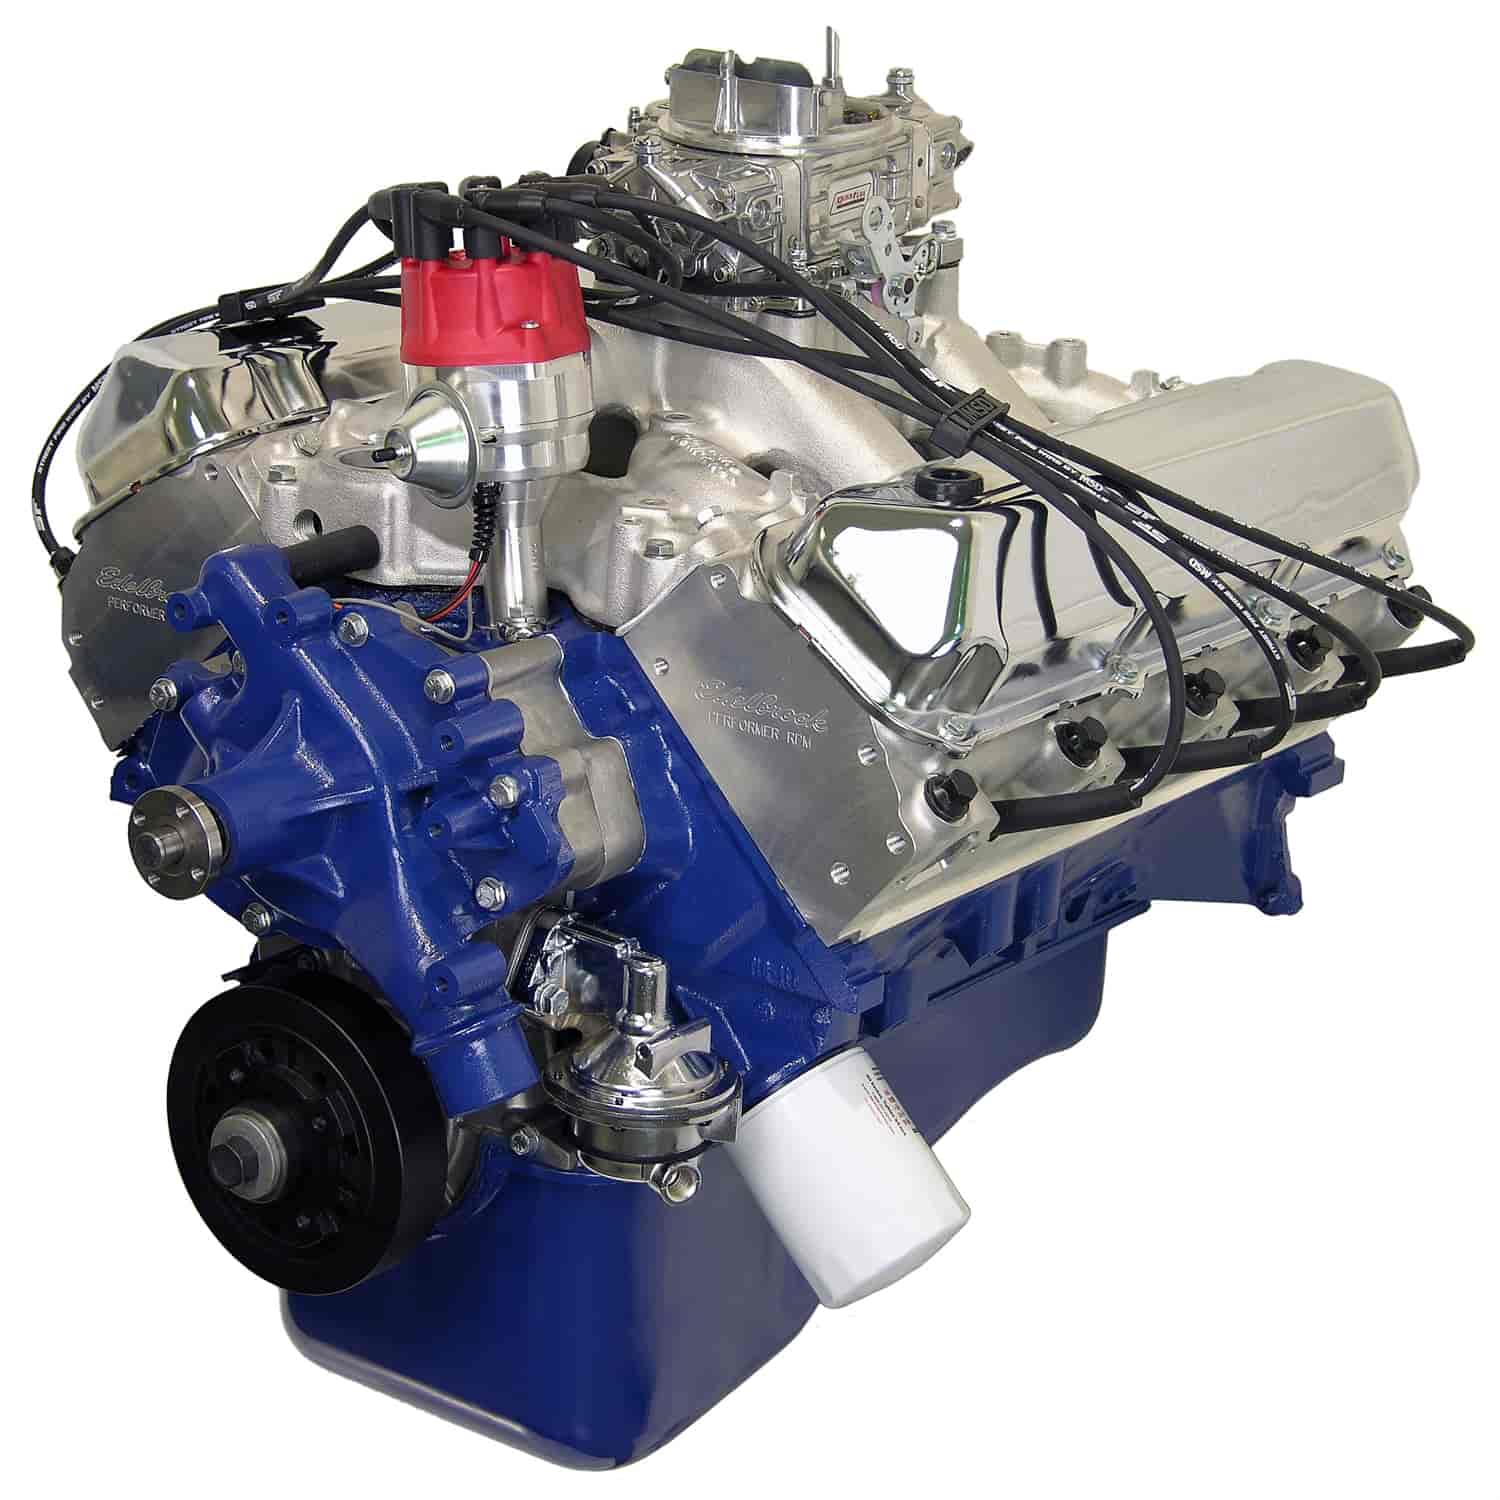 High Performance Crate Engine Big Block Ford 502ci / 515HP / 585TQ